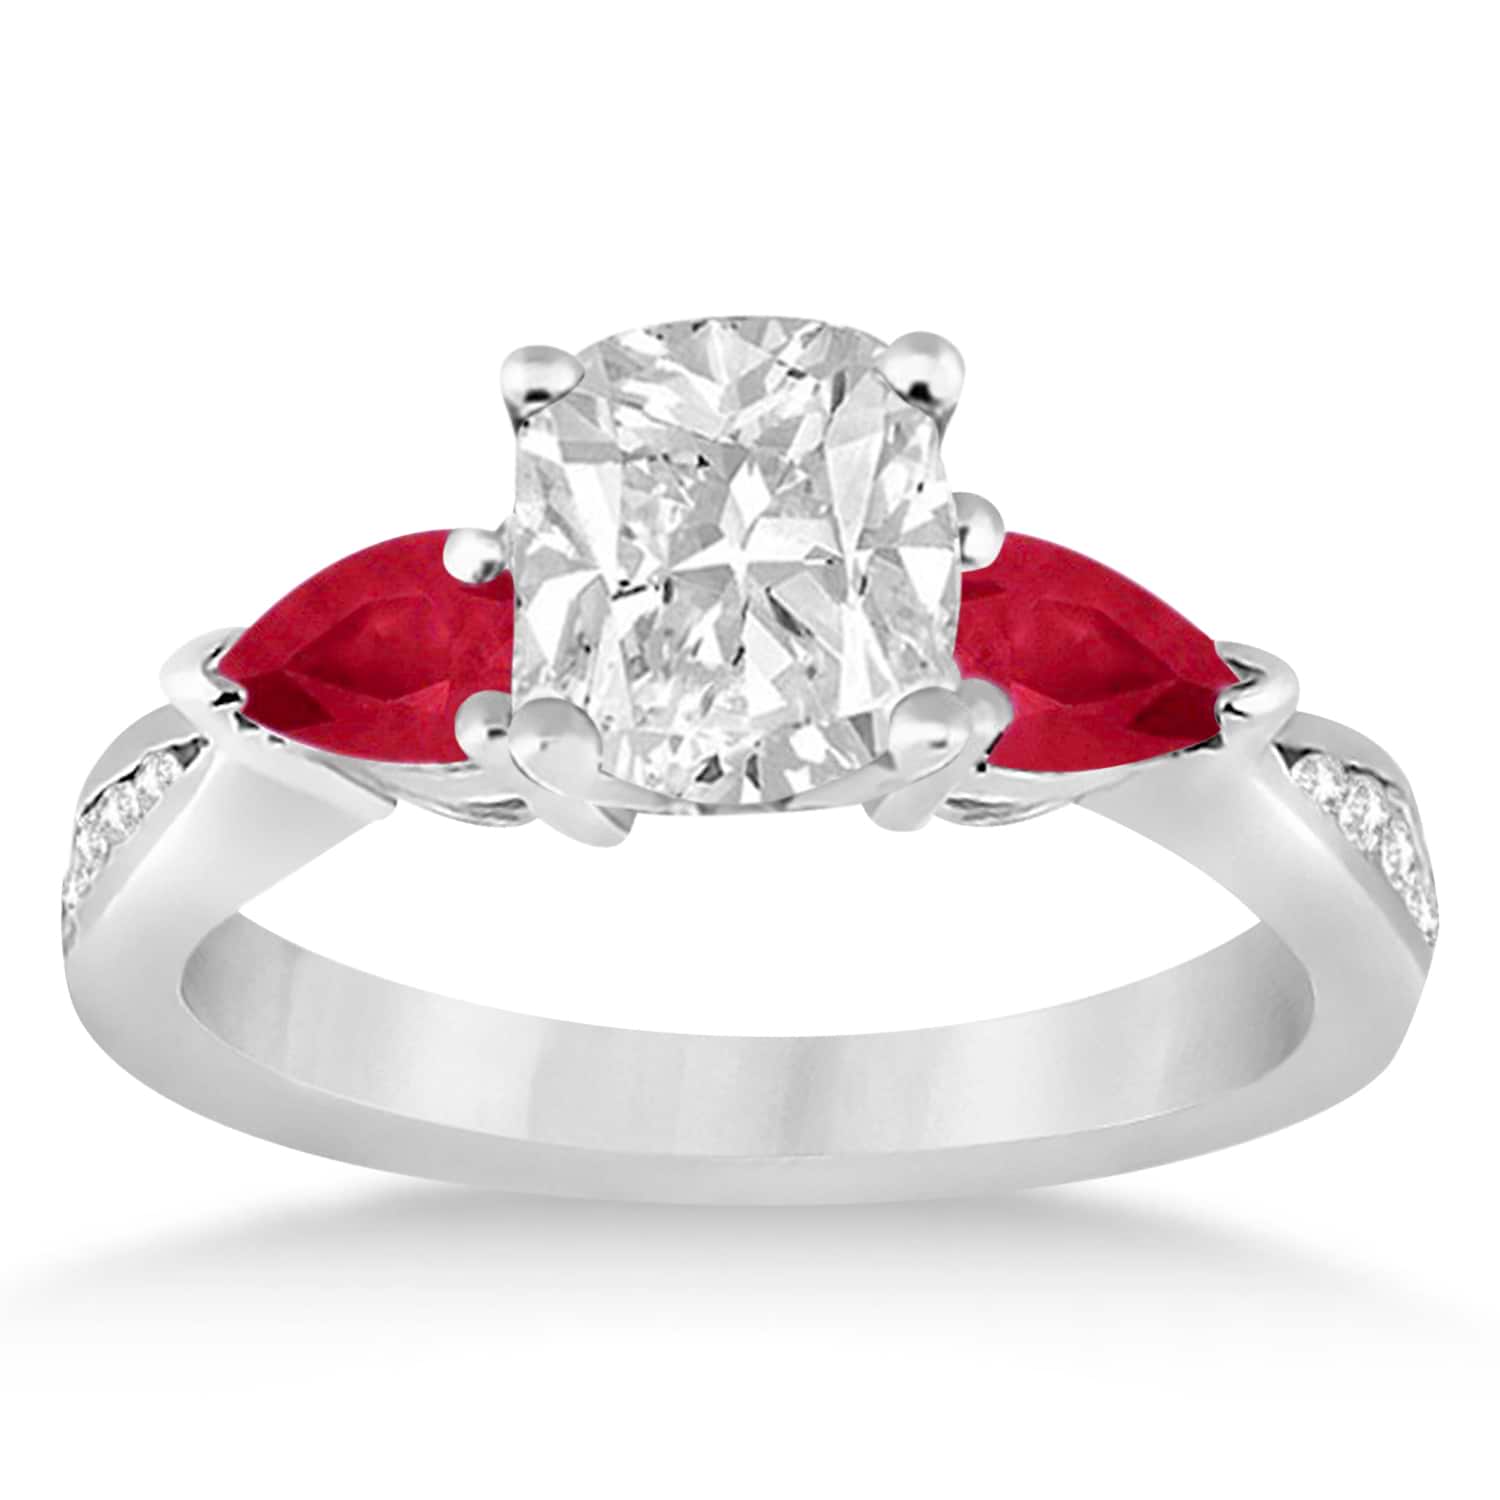 Cushion Diamond & Pear Ruby Gemstone Engagement Ring Platinum (1.29ct)